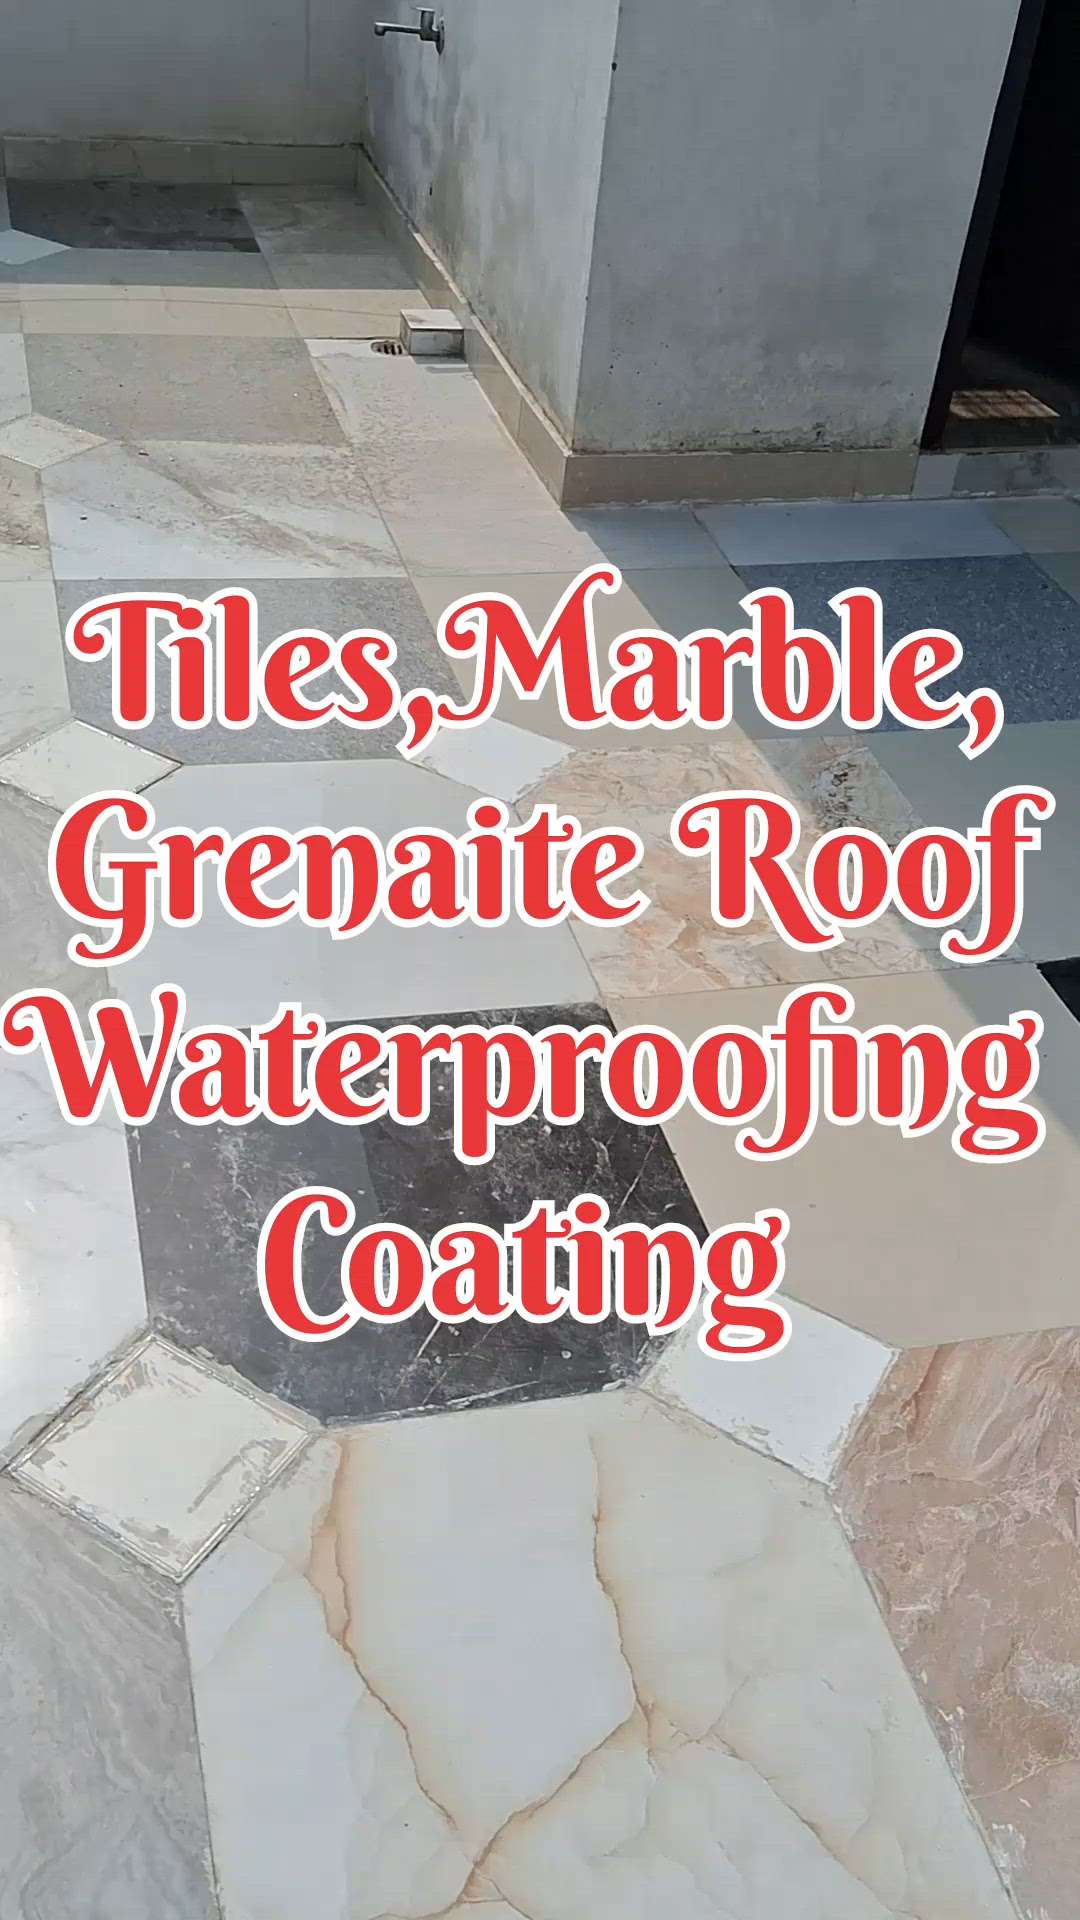 #Waterproofing #constructionproject #tiles #rooftiles #marble #kotastone #likej #leakage #Seepage #seelan